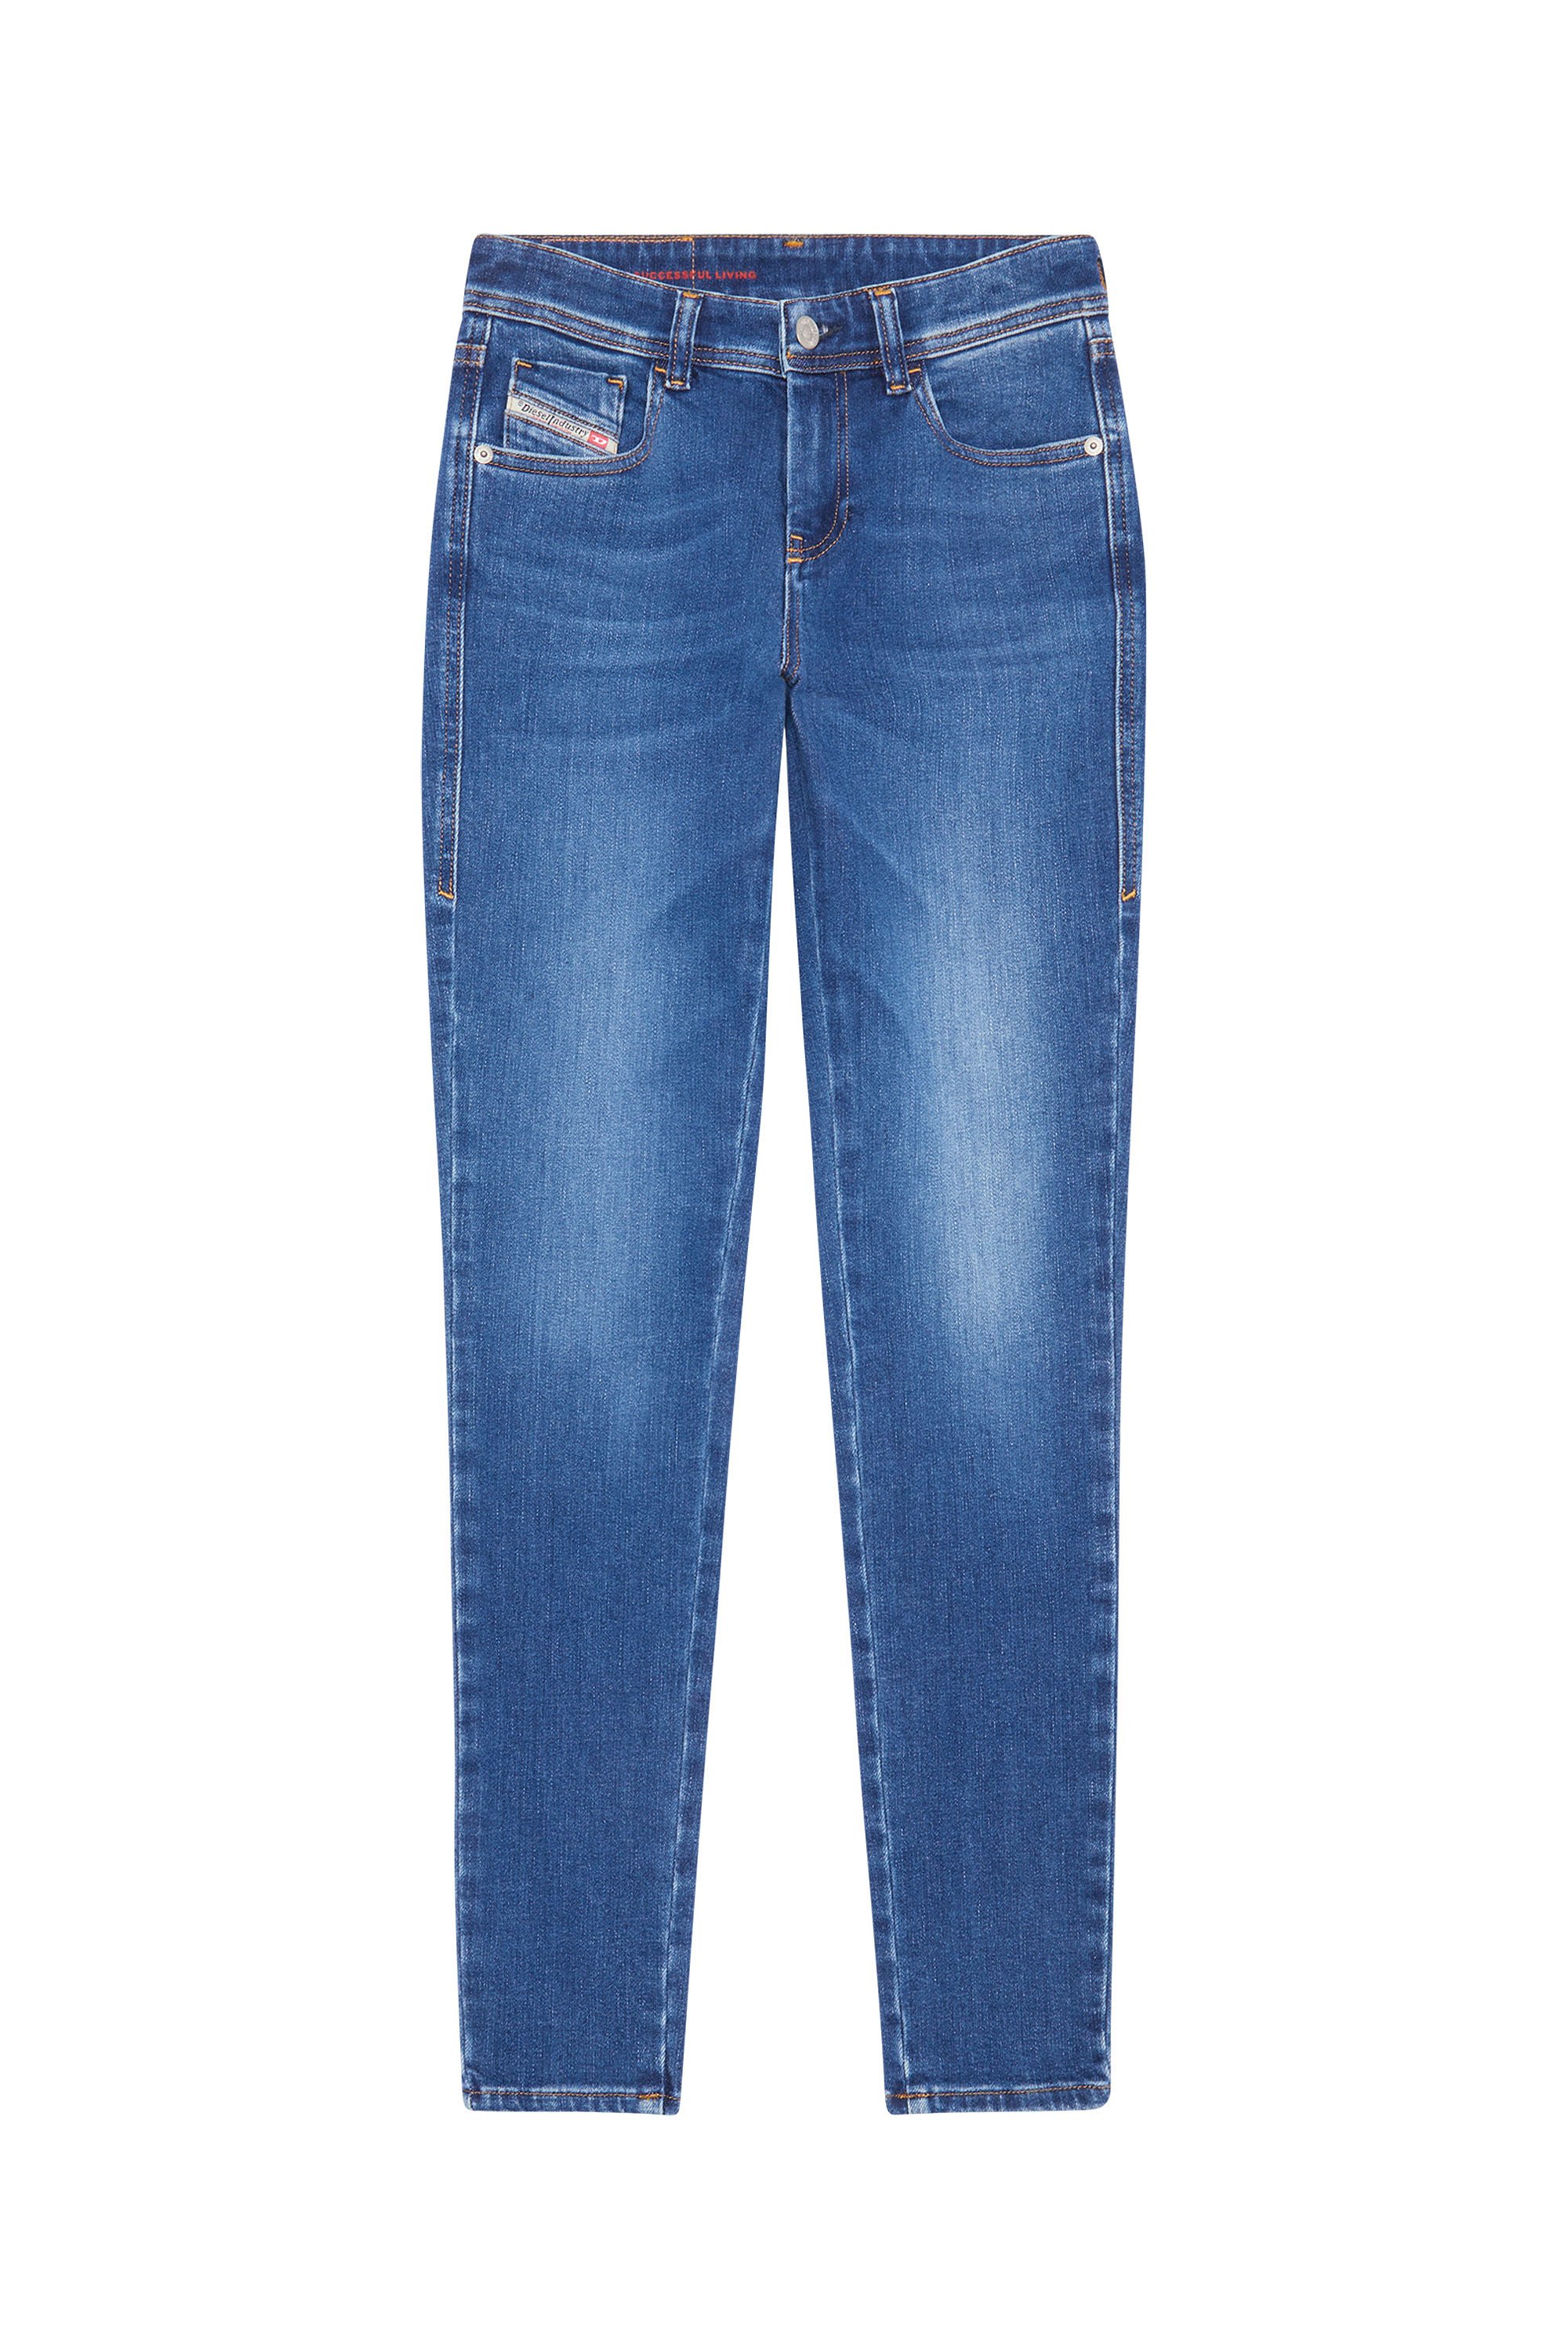 2017 Slandy 09C21 Super skinny Jeans, Medium blue - Jeans